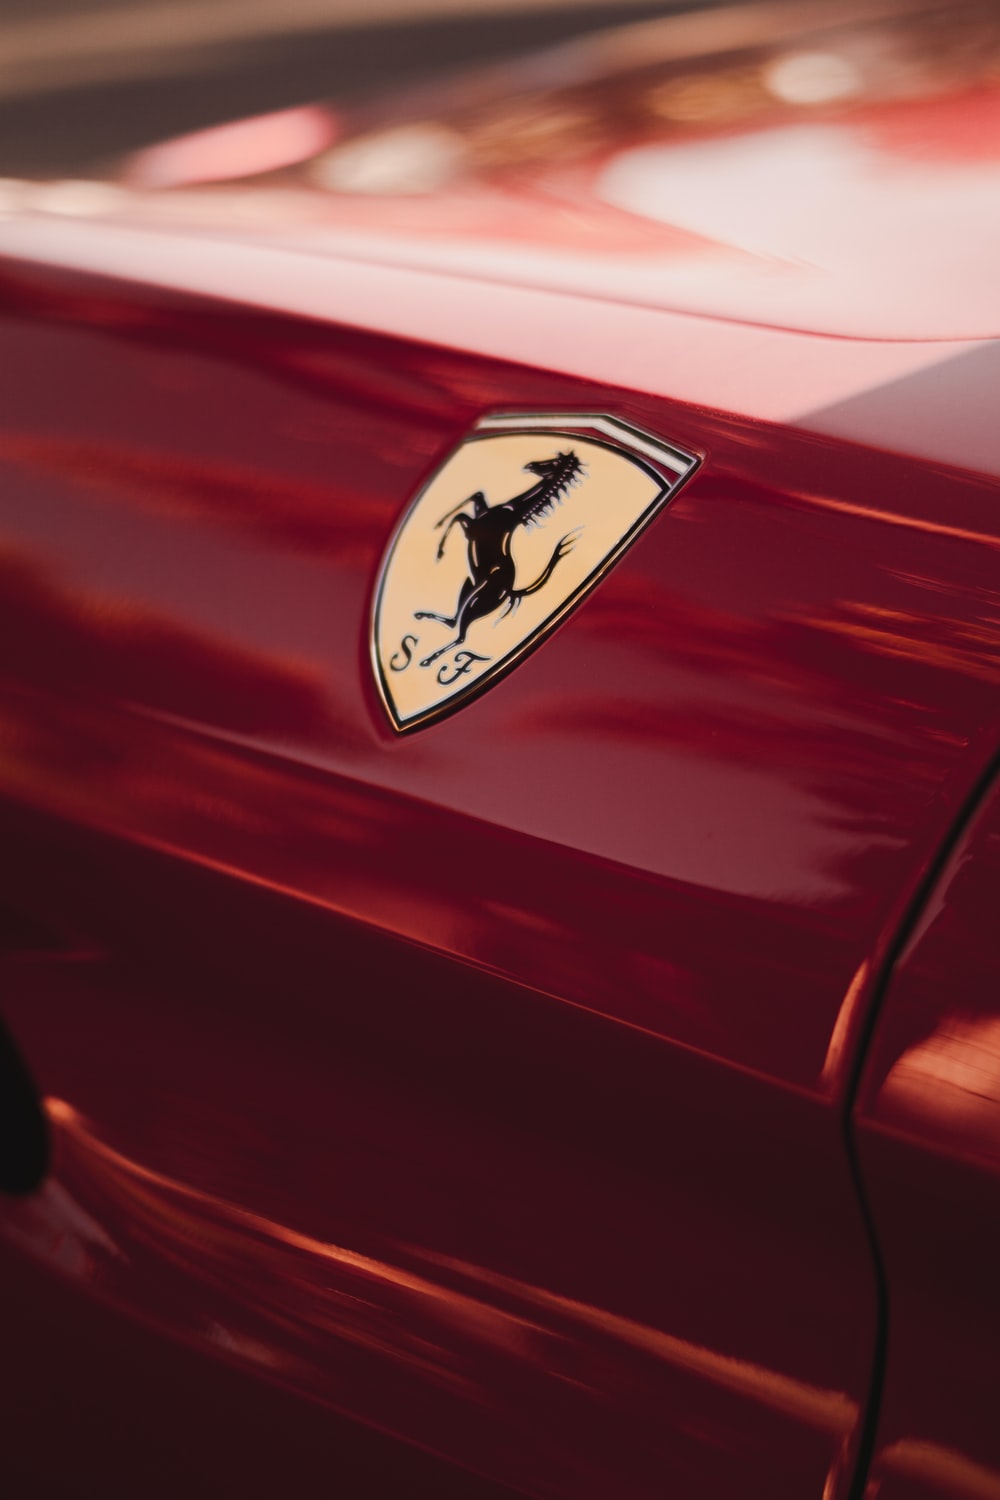 Ferrari Logo Picture. Download Free Image